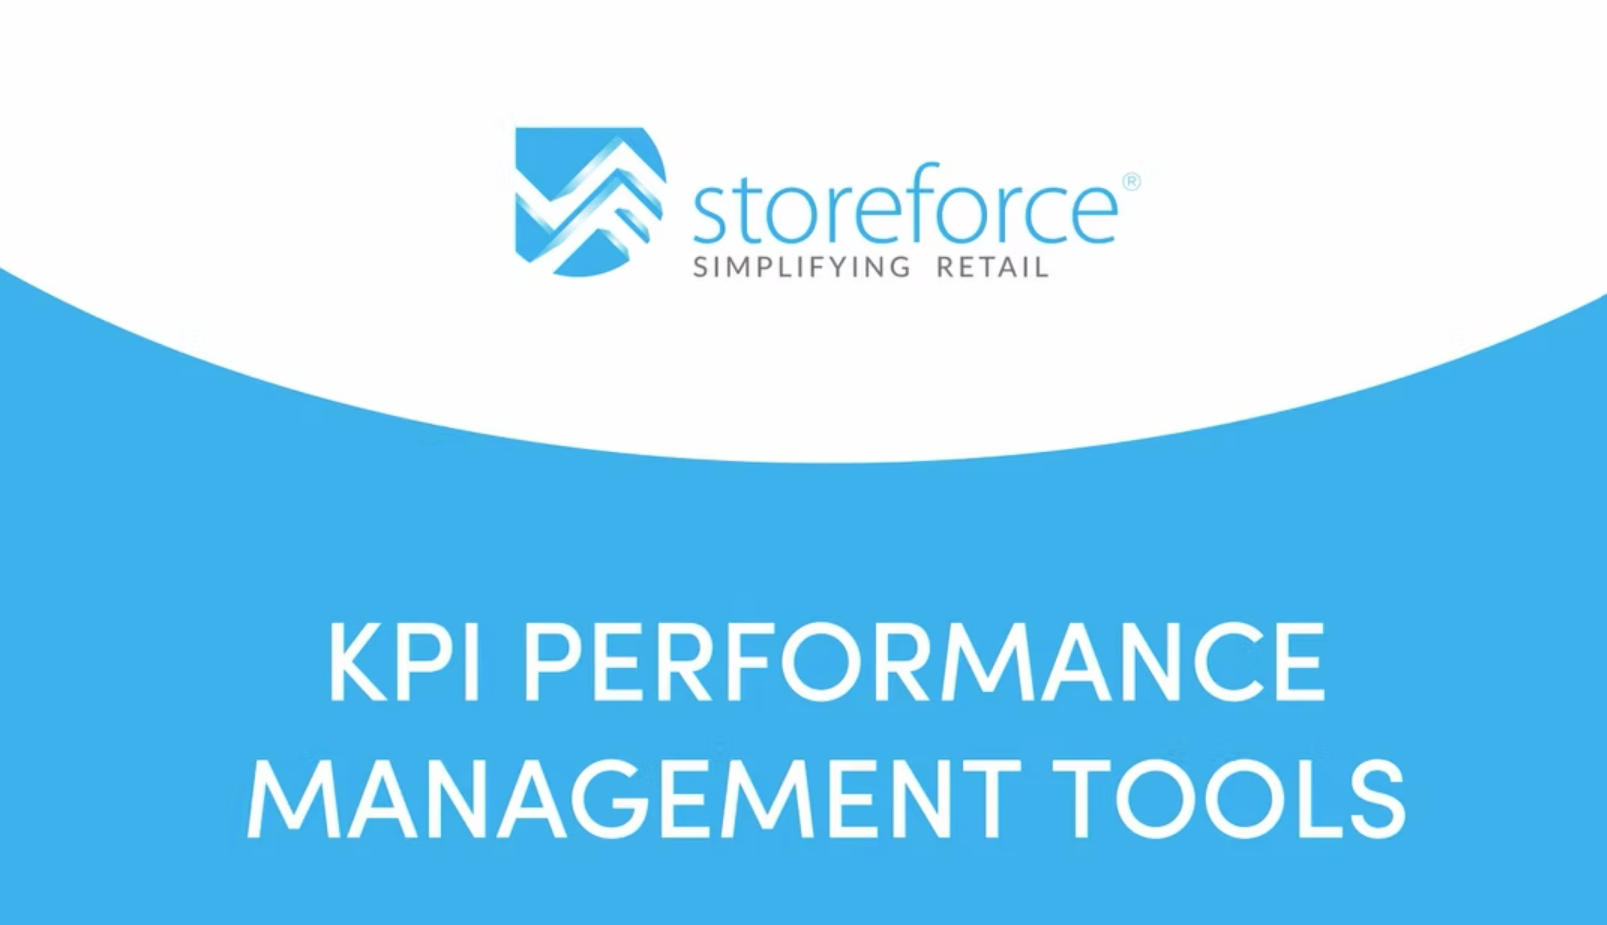 StoreForce KPI Performance Management